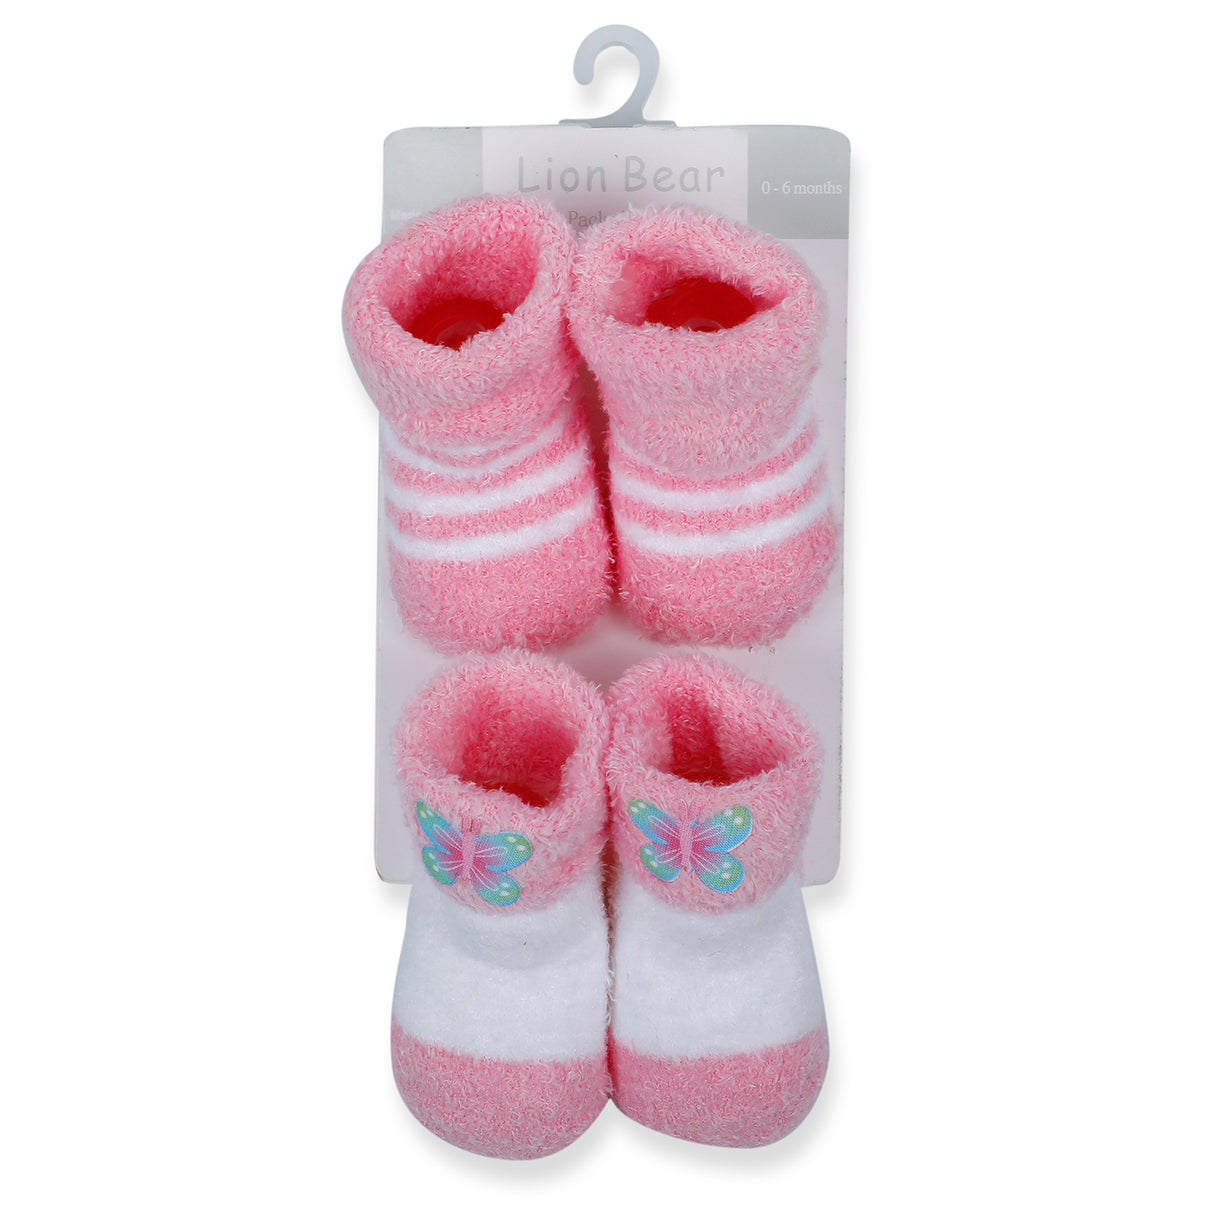 Newborn Breathable Infant Pack of 2 Cotton Socks